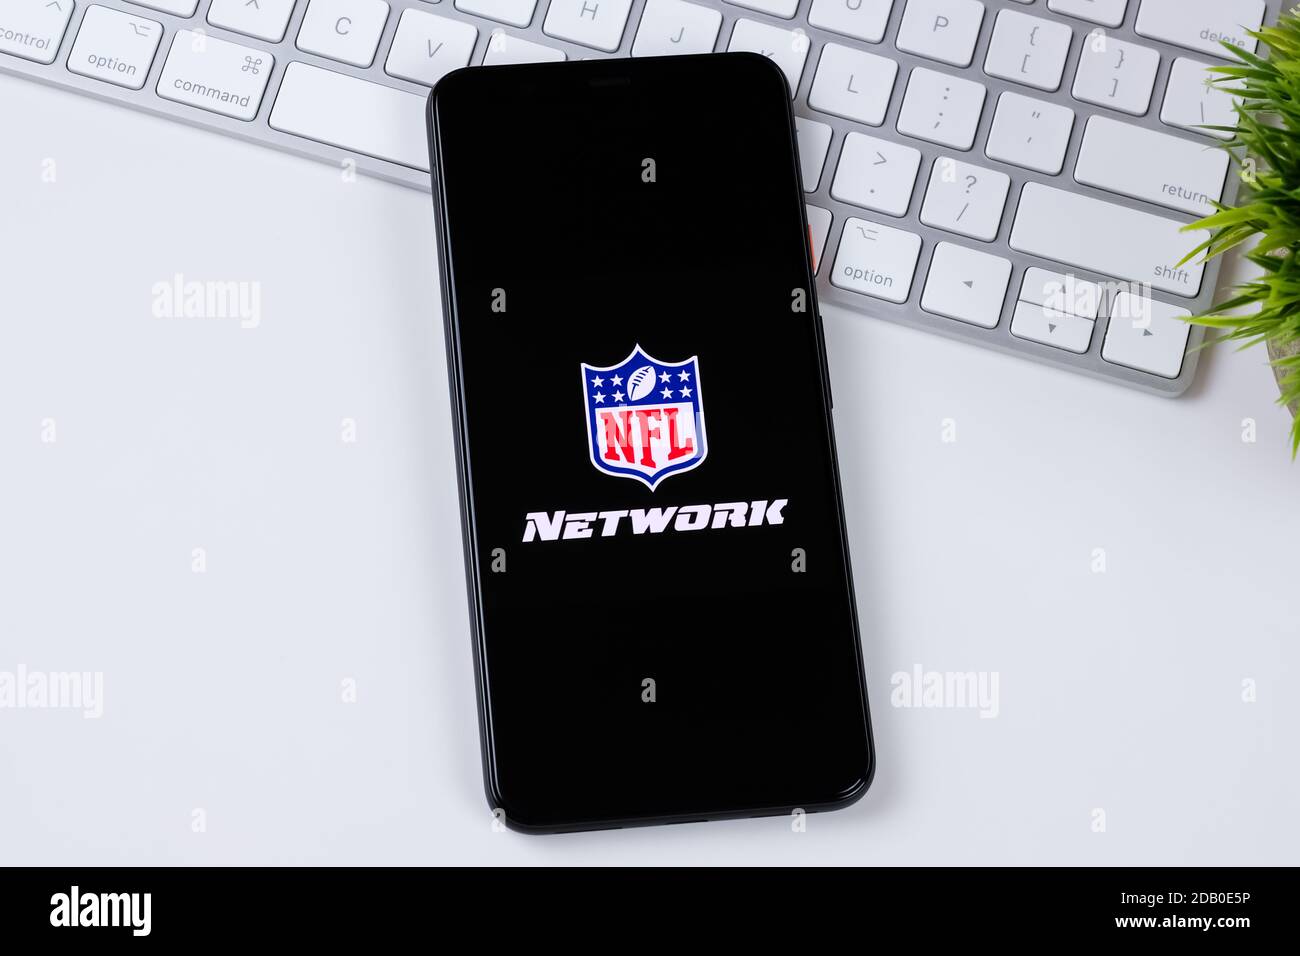 NFL Network app logo on a smartphone screen Stock Photo